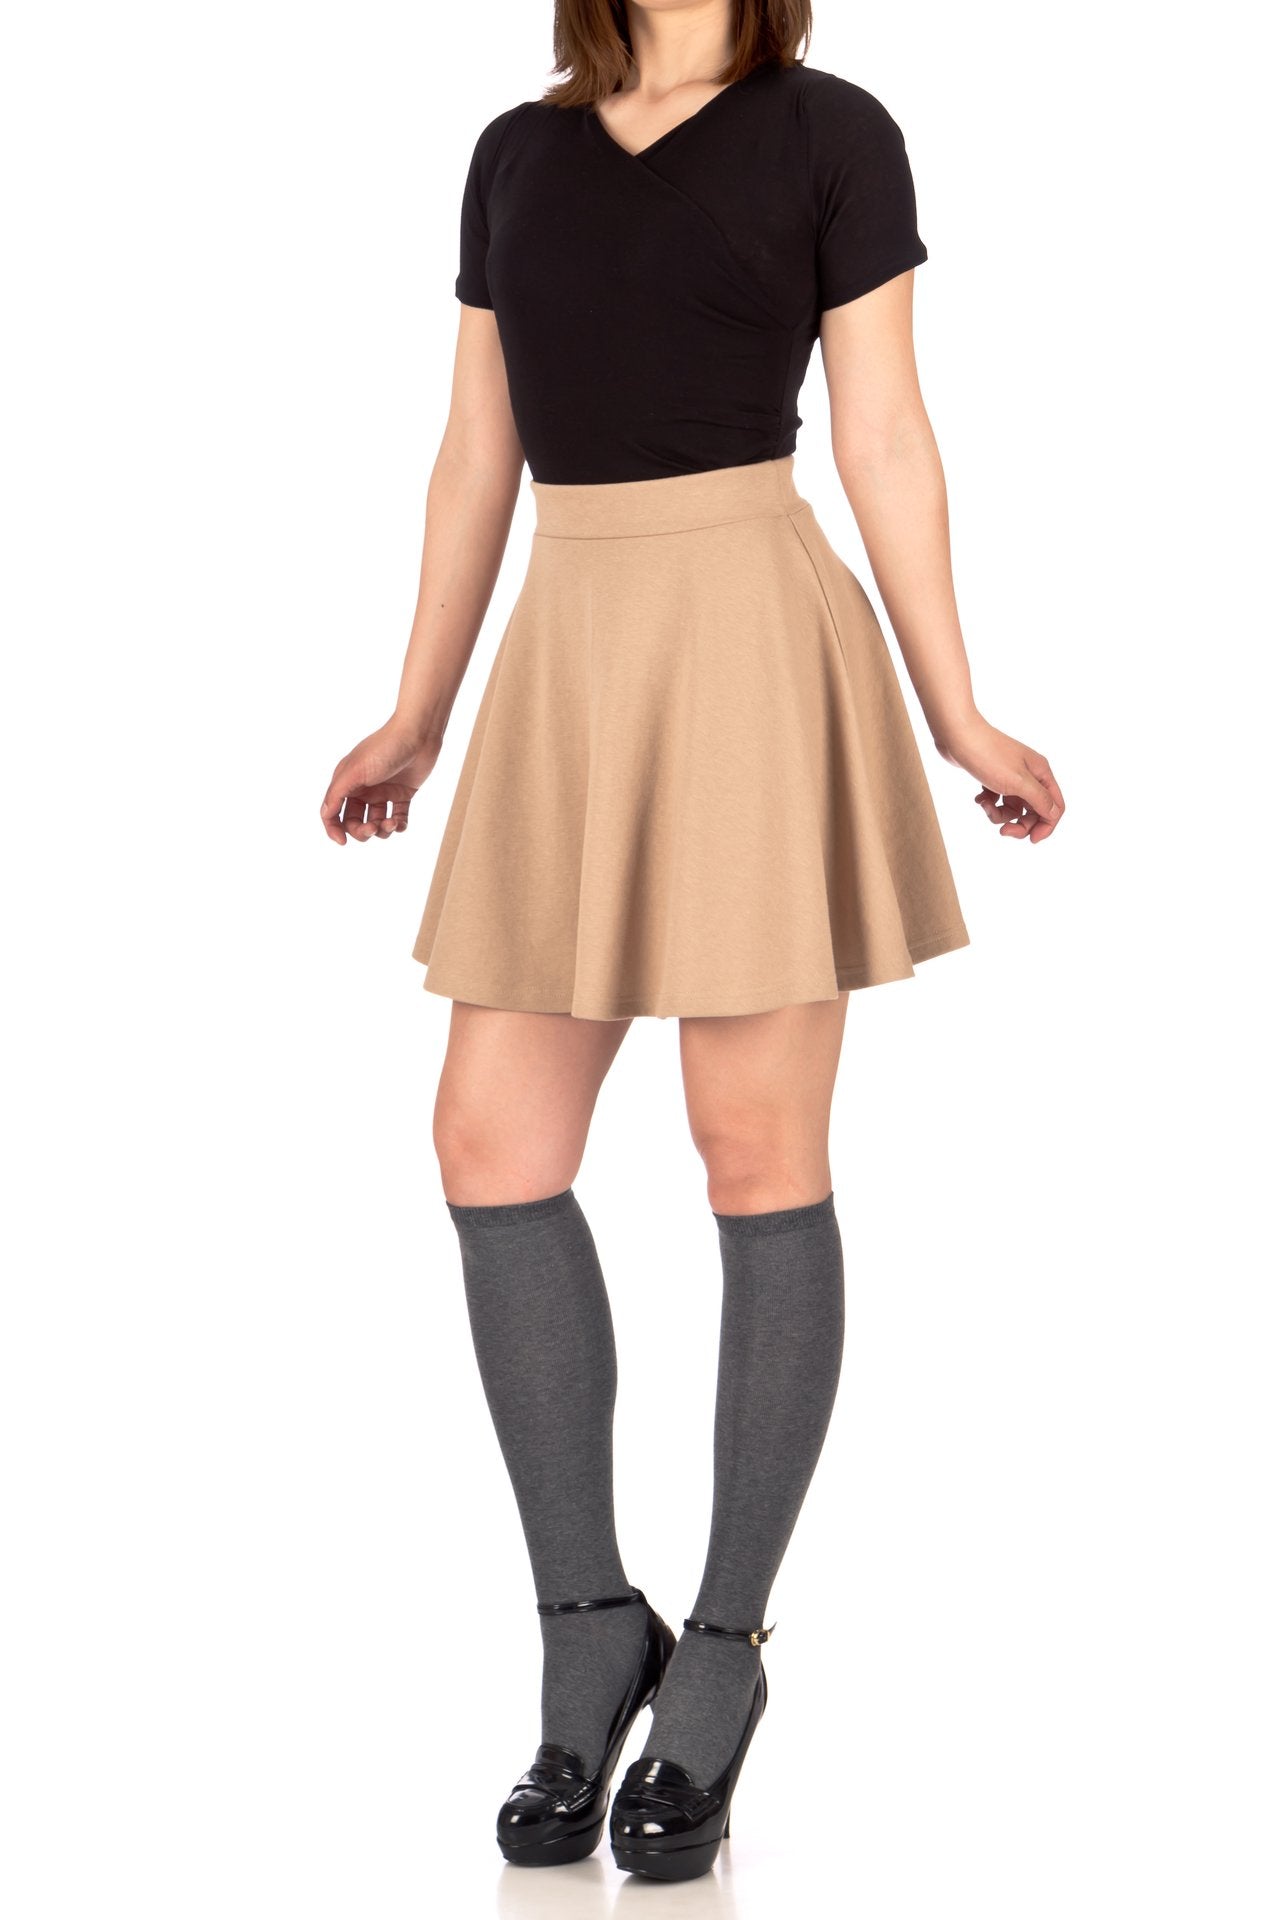 Basic Solid Stretchy Cotton High Waist A-line Flared Skater Mini Skirt_Beige